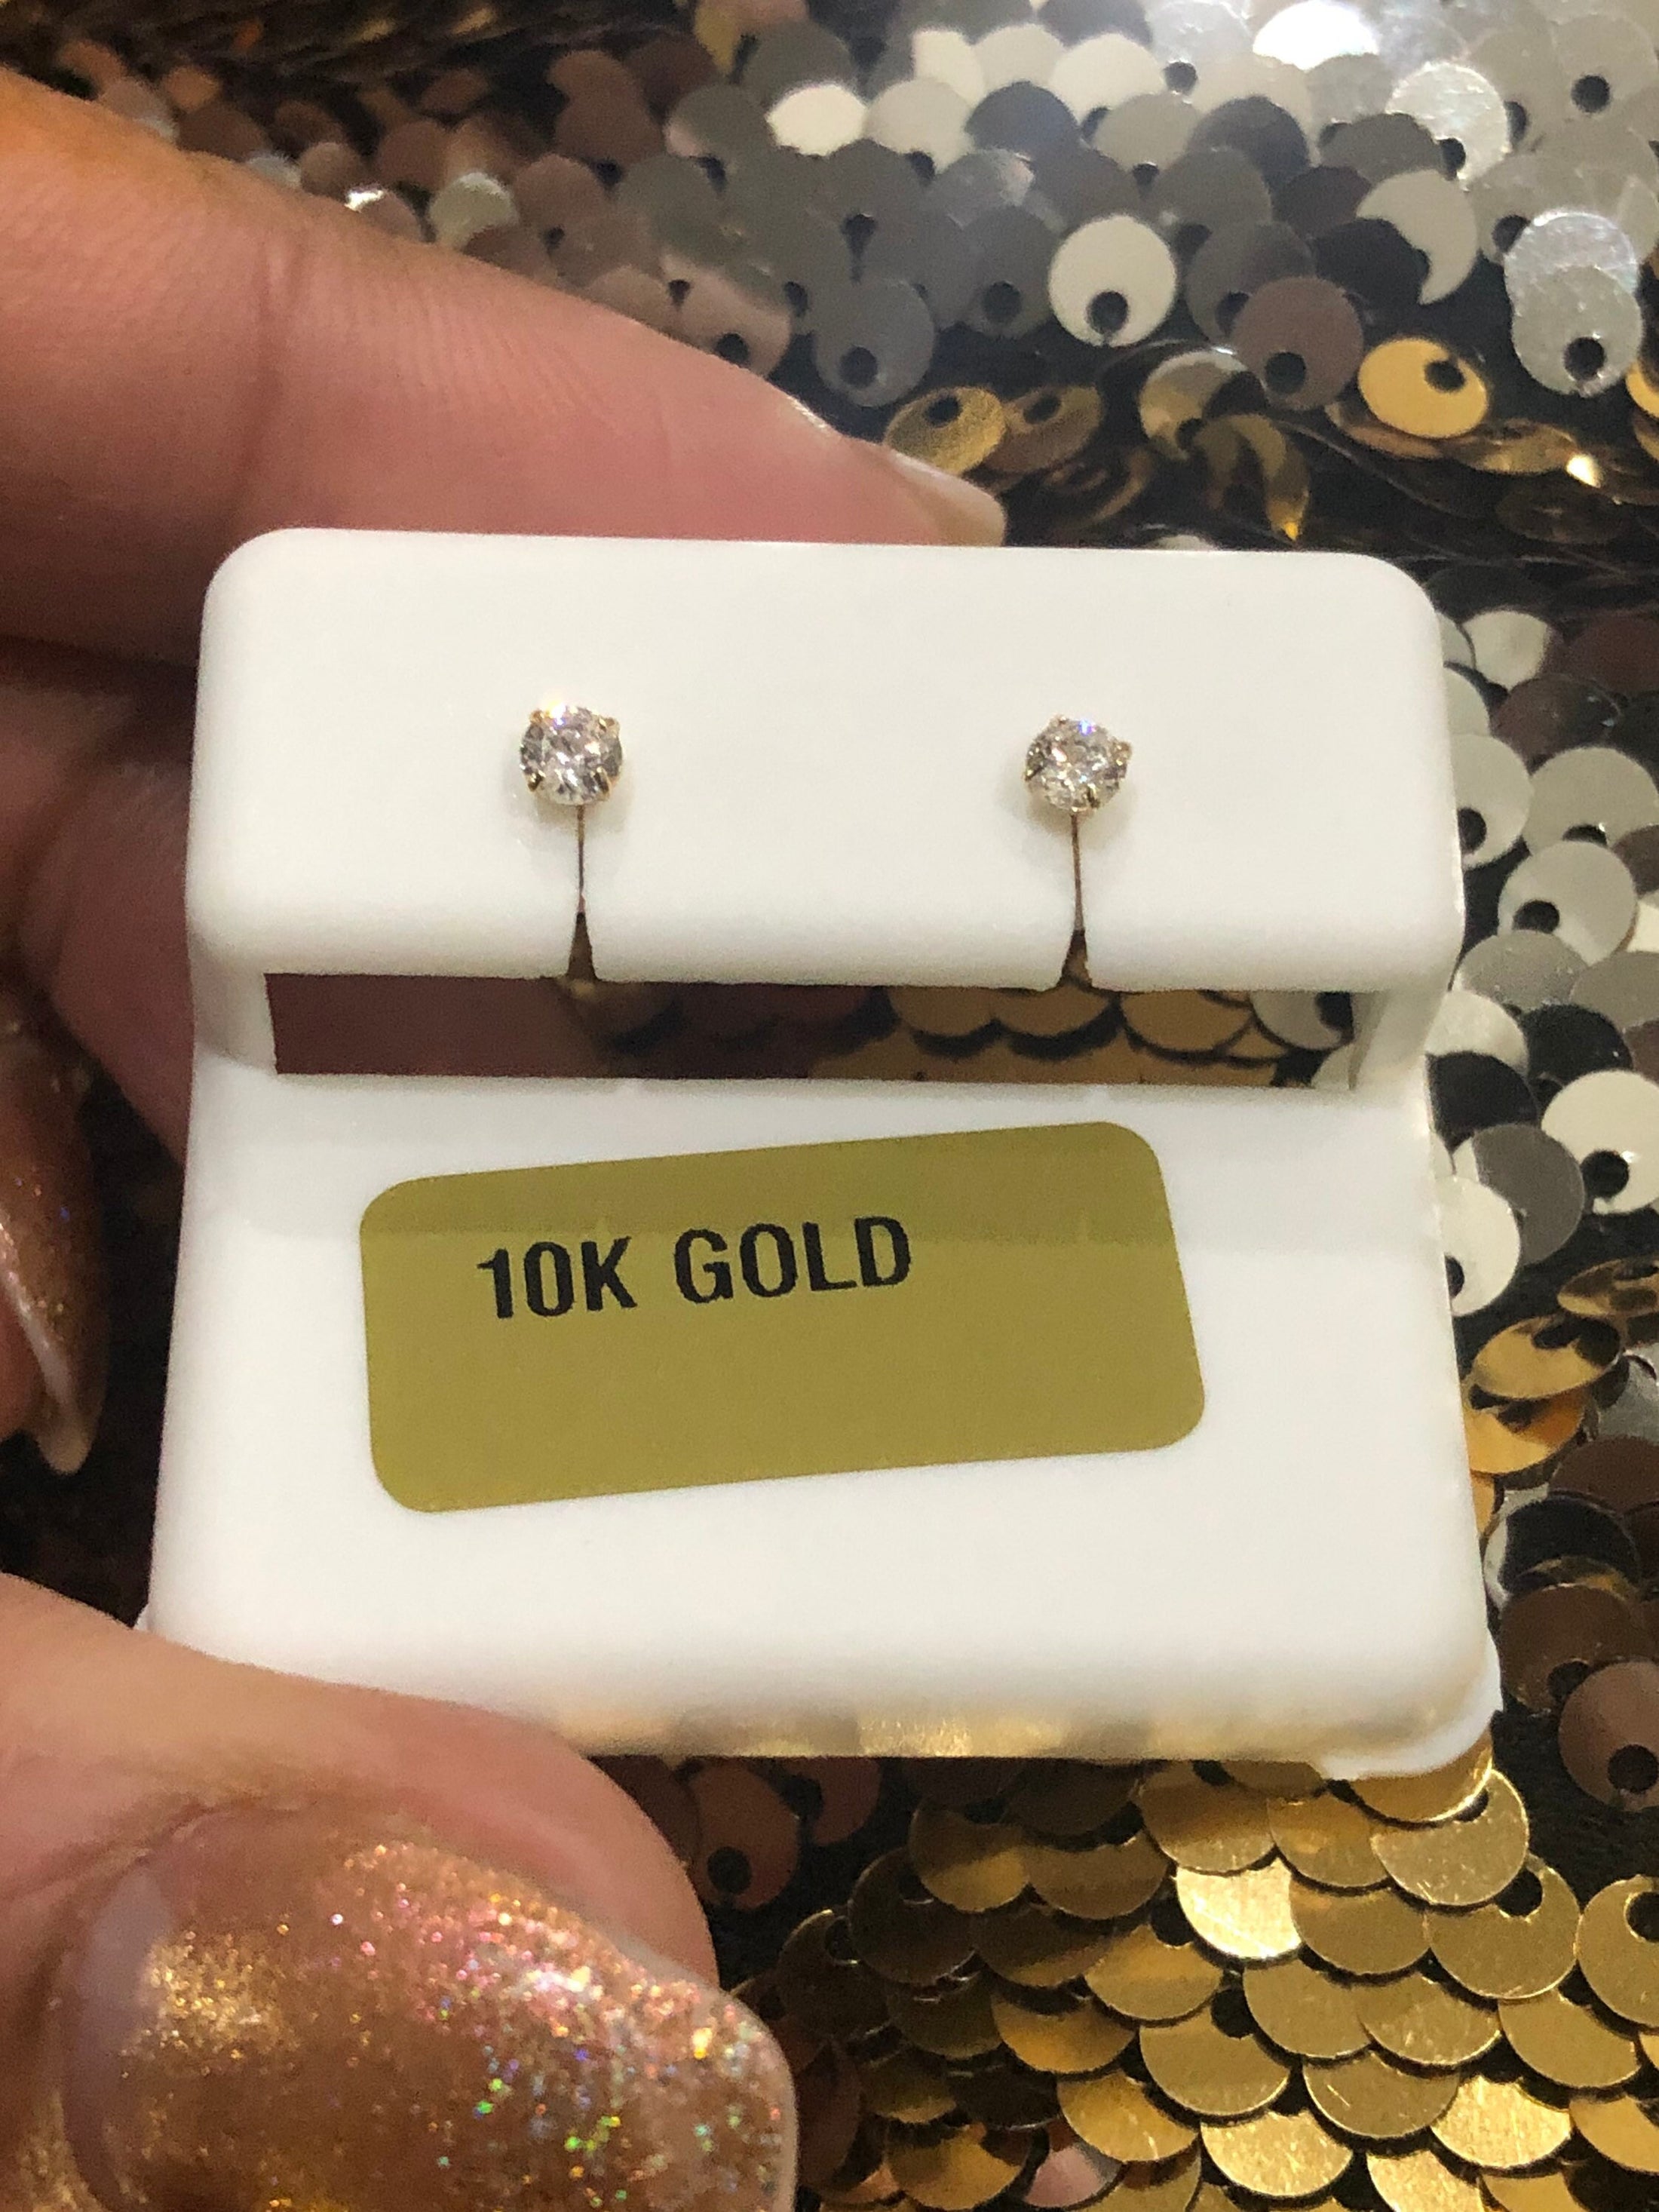 10k solid gold earrings, real gold,screw back studs for men, women, 3mm solid gold solitaire VVS Swarovski Studs, Baby, Girls, Gift for kids